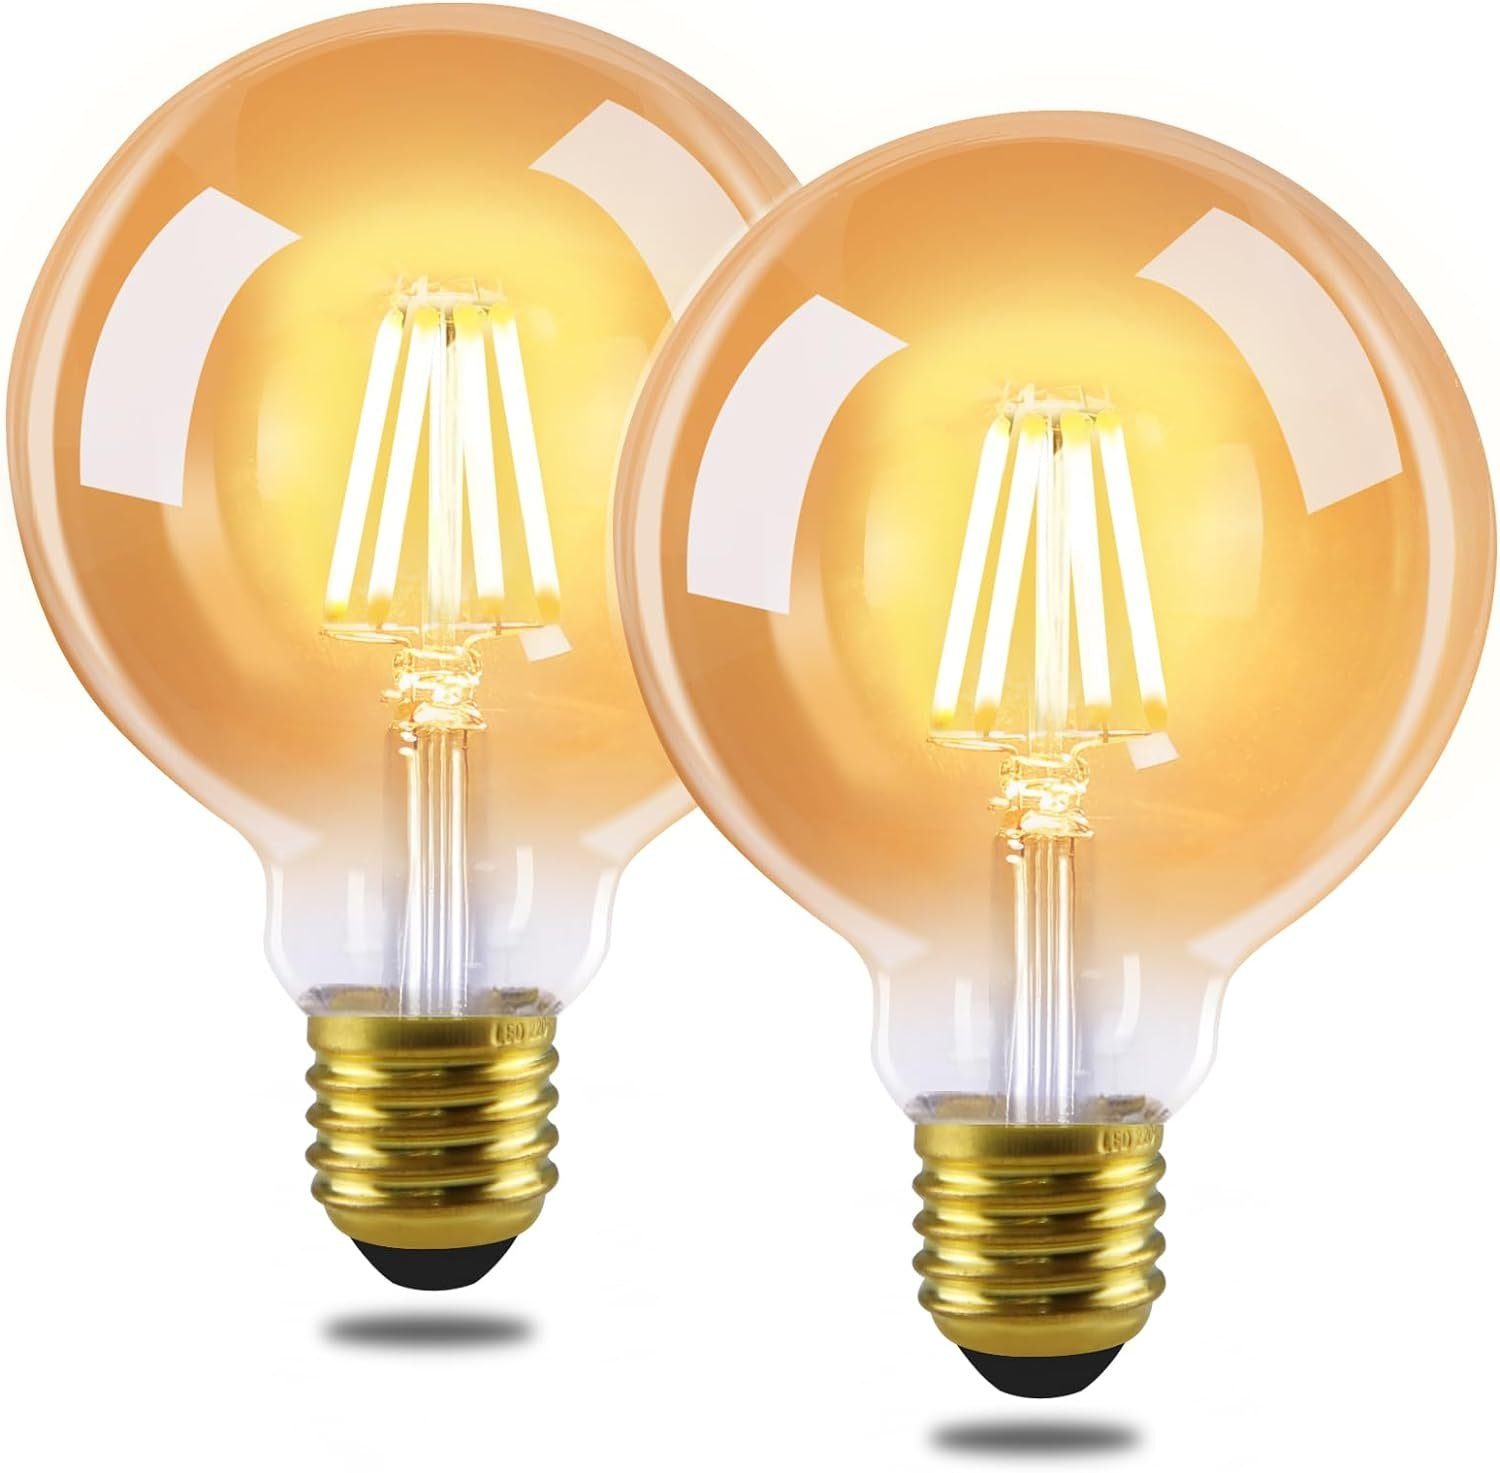 Nettlife LED-Leuchtmittel 2 Stück LED Glühbirne E27 Vintage LampeG95 Warmweiss Filament, E27, 2 St., Warmweiß, für Haus Hotel Café Bar | Leuchtmittel